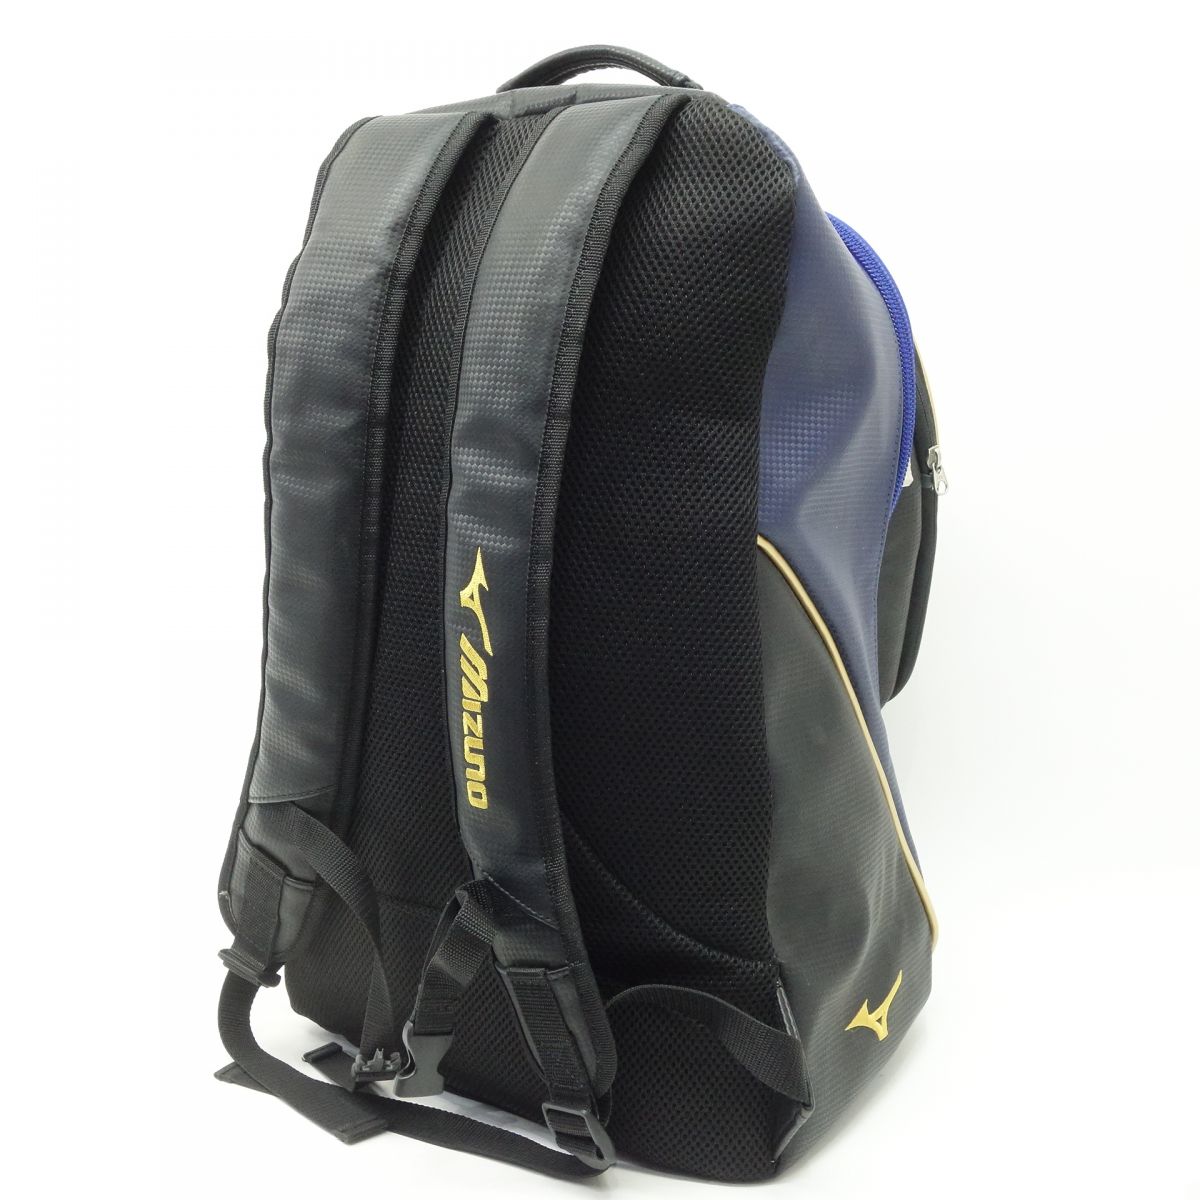 MizunoPro/ Mizuno Pro rucksack 40L navy backpack baseball outdoor * used 